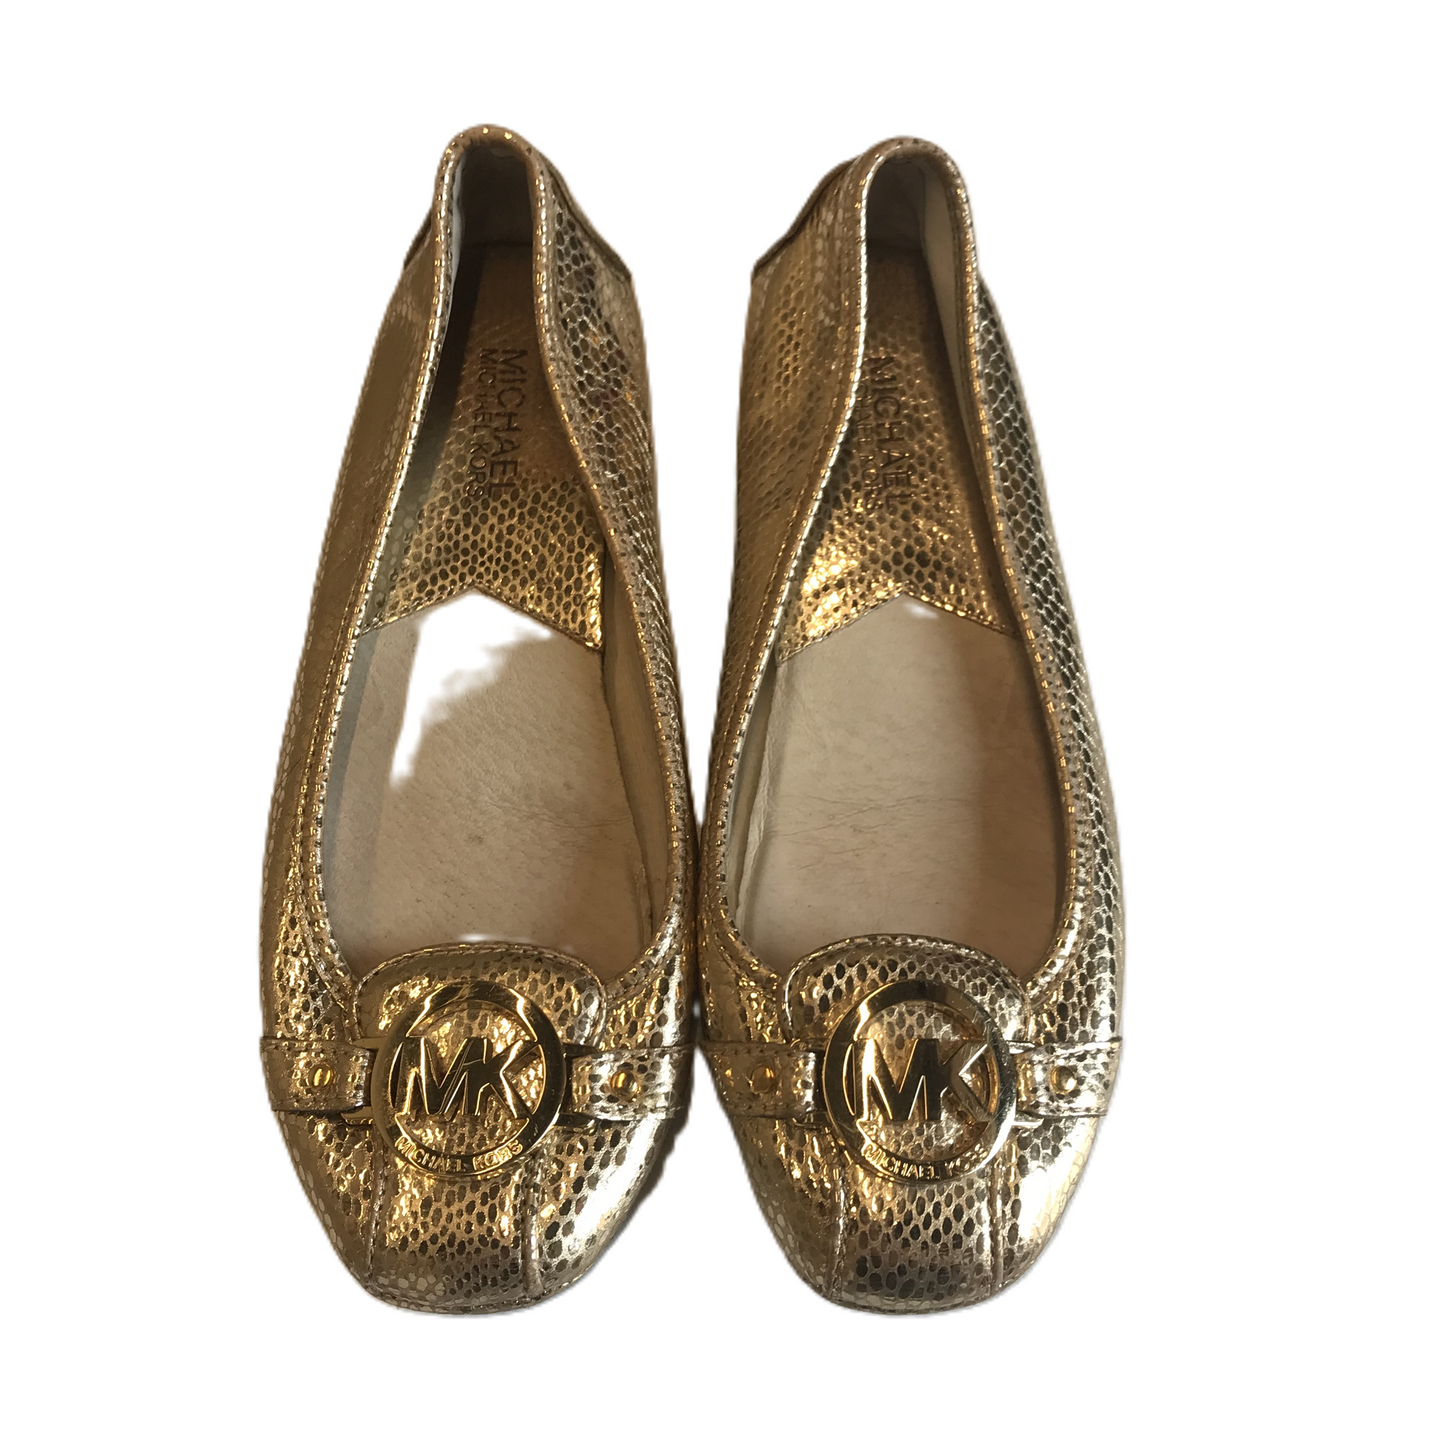 Gold Shoes Designer By Michael Kors, Size: 8